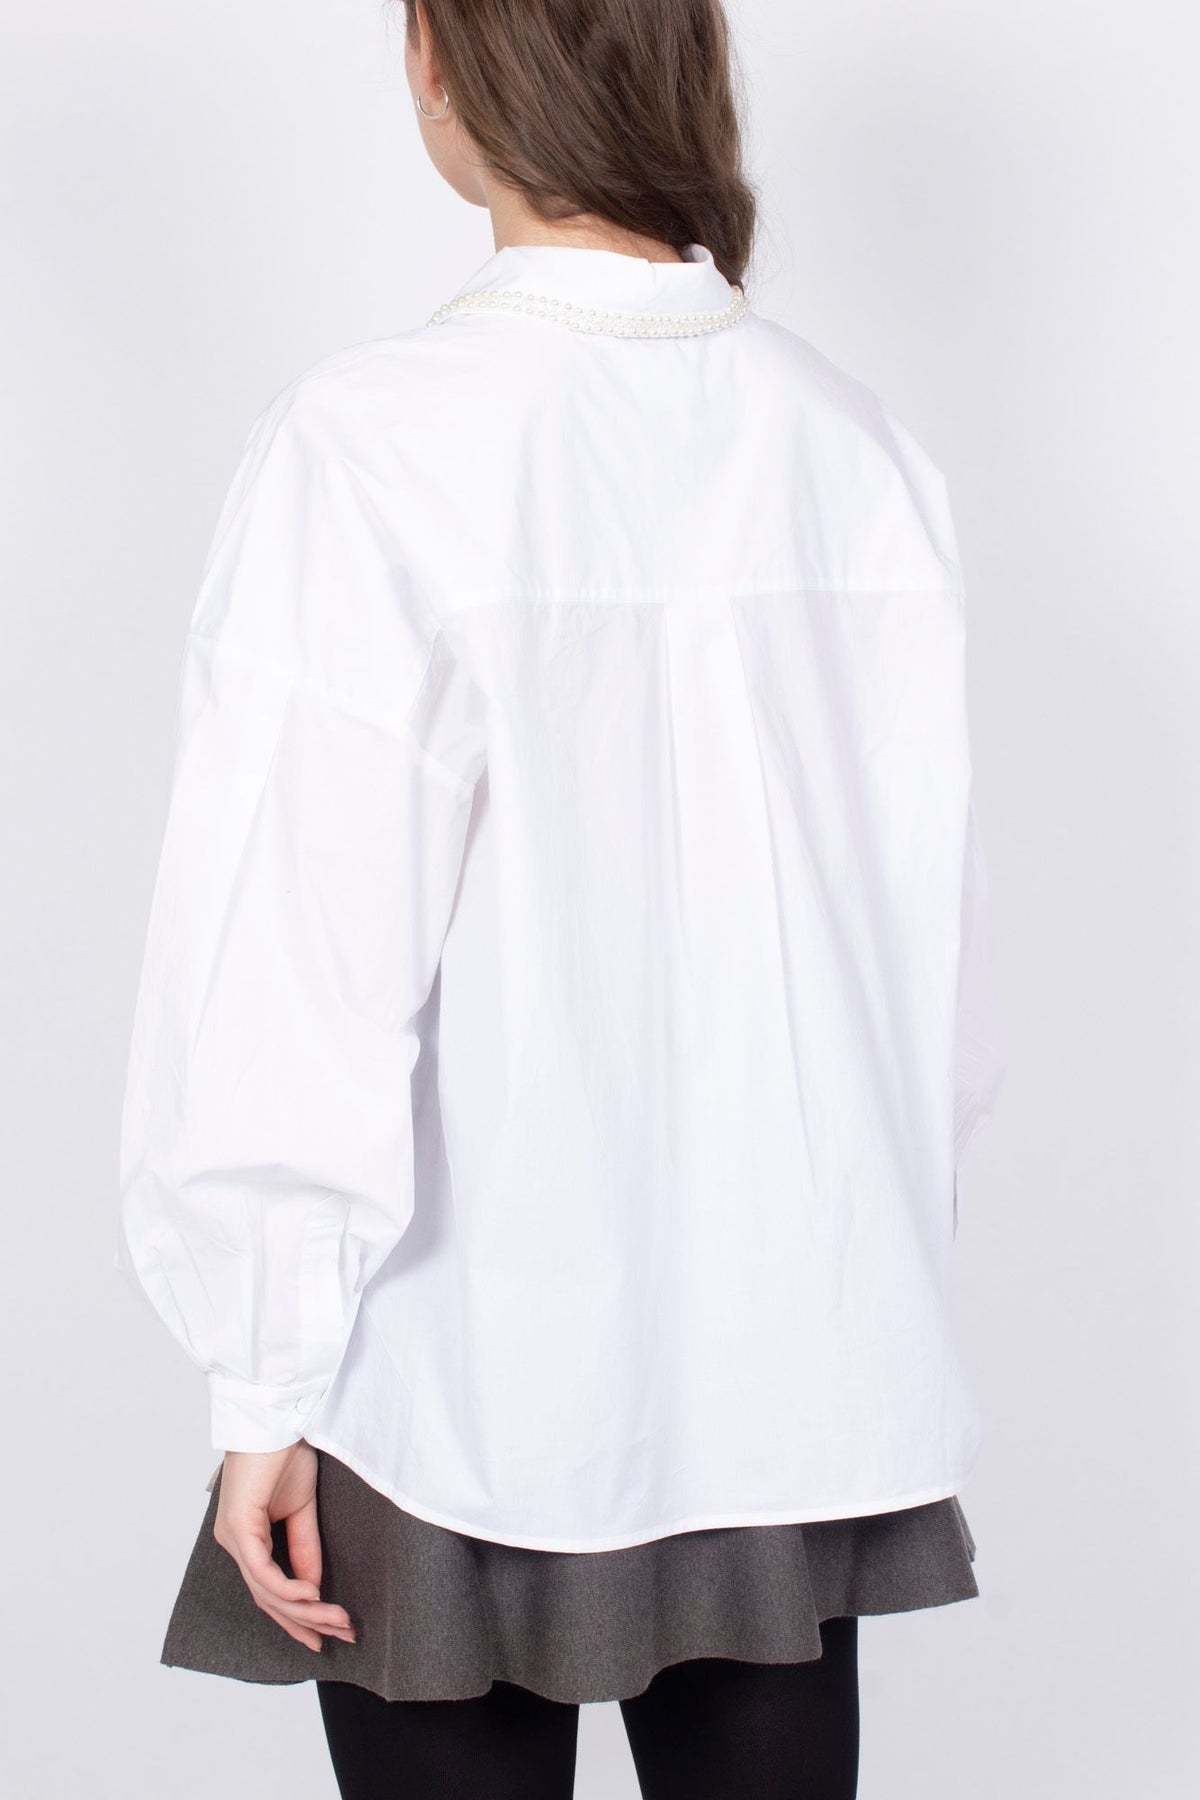 Andrew Pearl Shirt - White - Designers Remix - T-skjorter & Topper - VILLOID.no